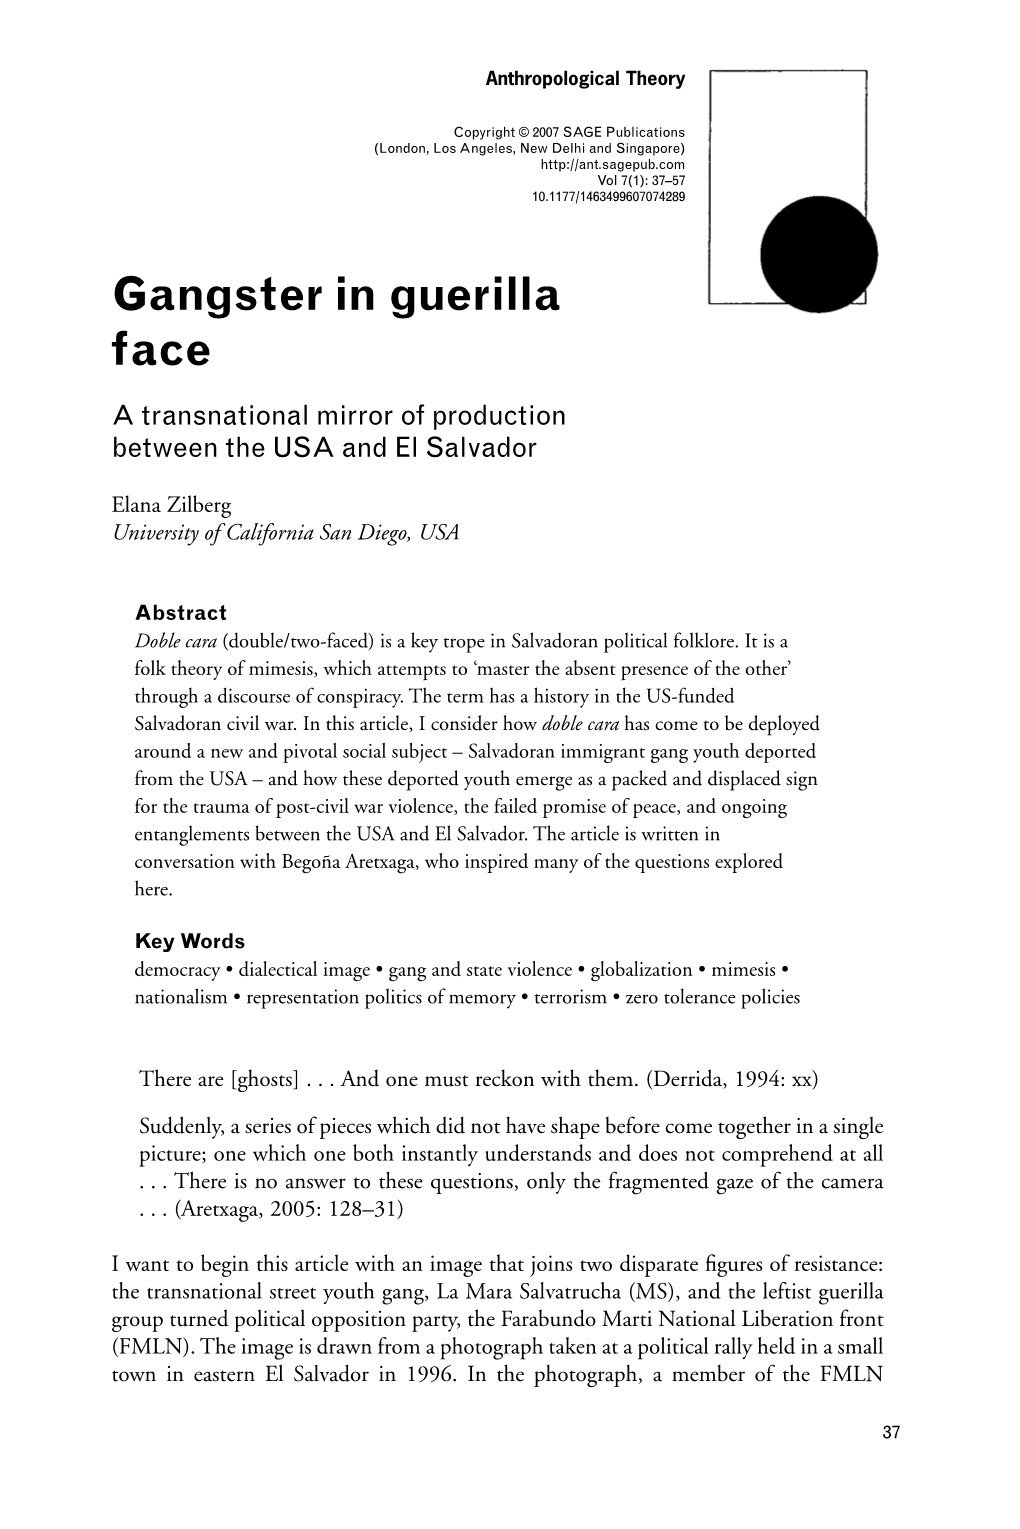 Gangster in Guerilla Face